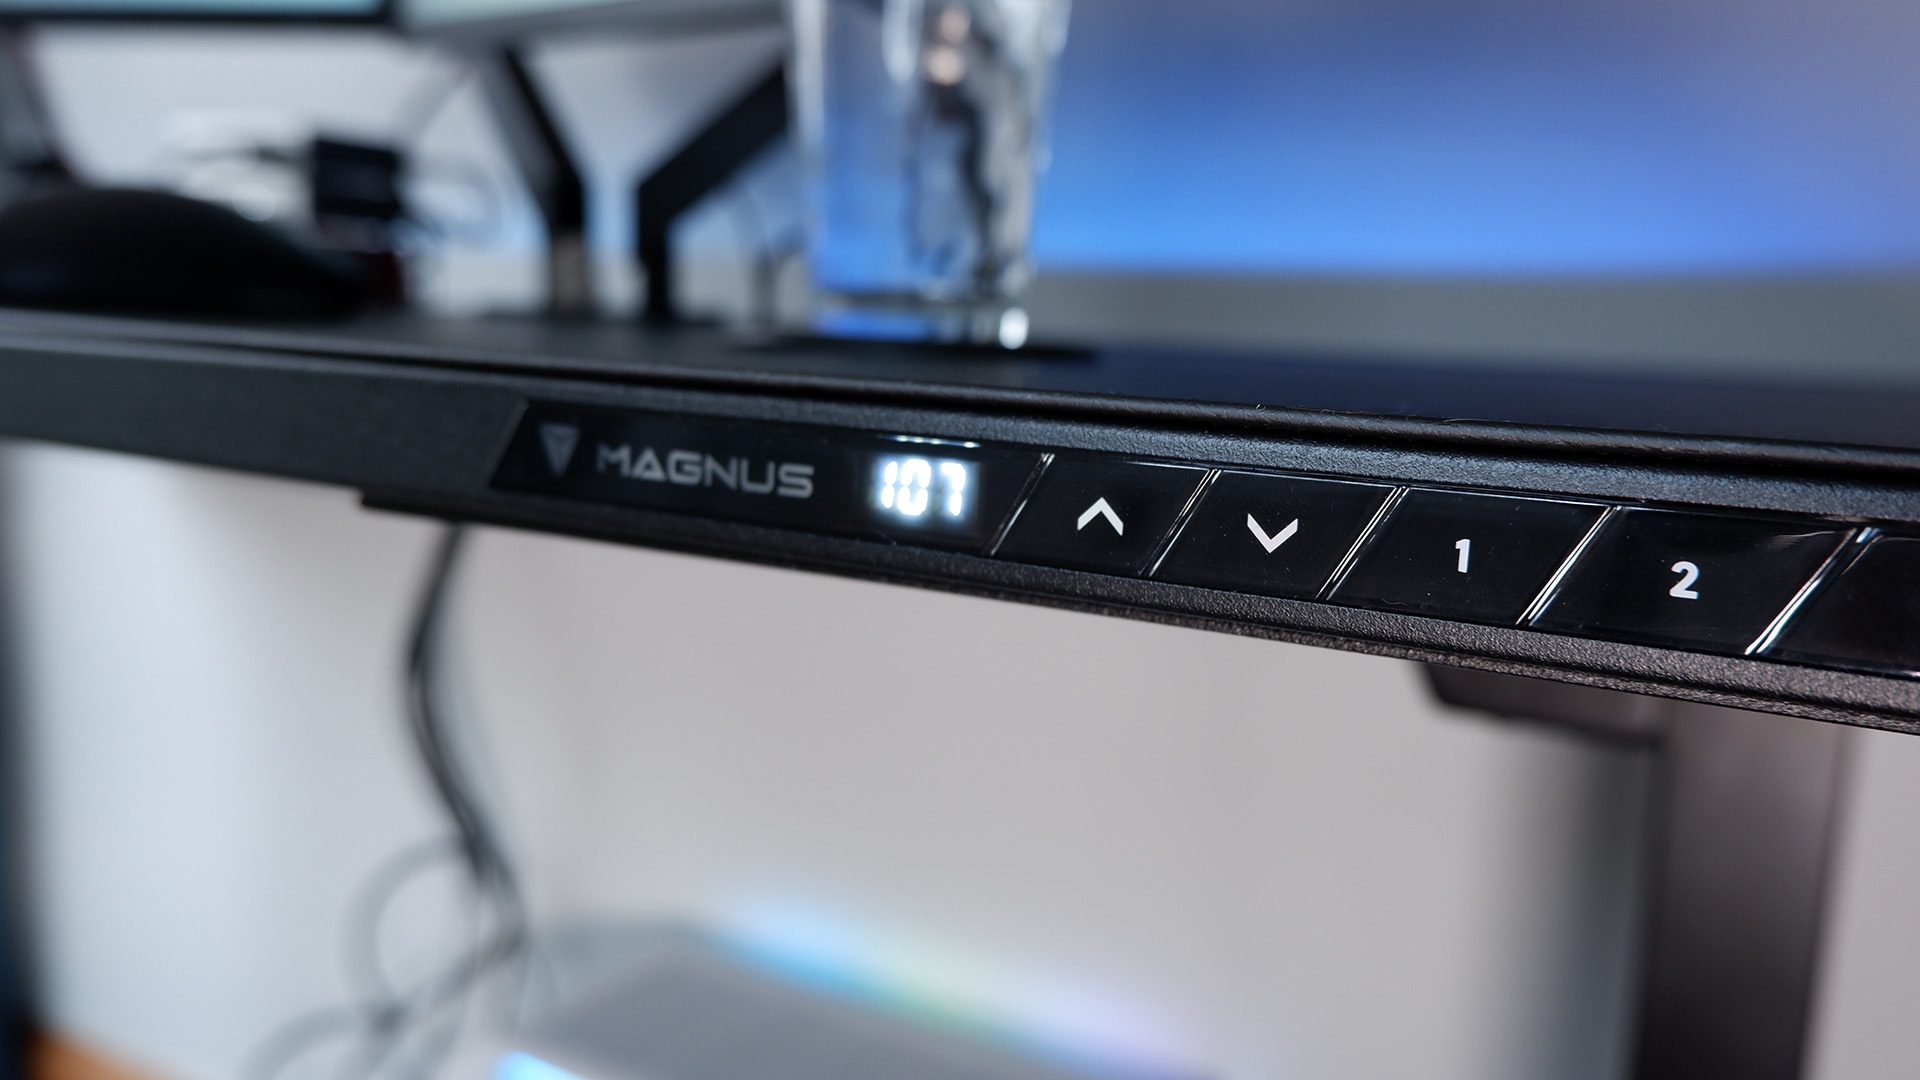 Secretlab Magnus Pro XL control panel lit up.